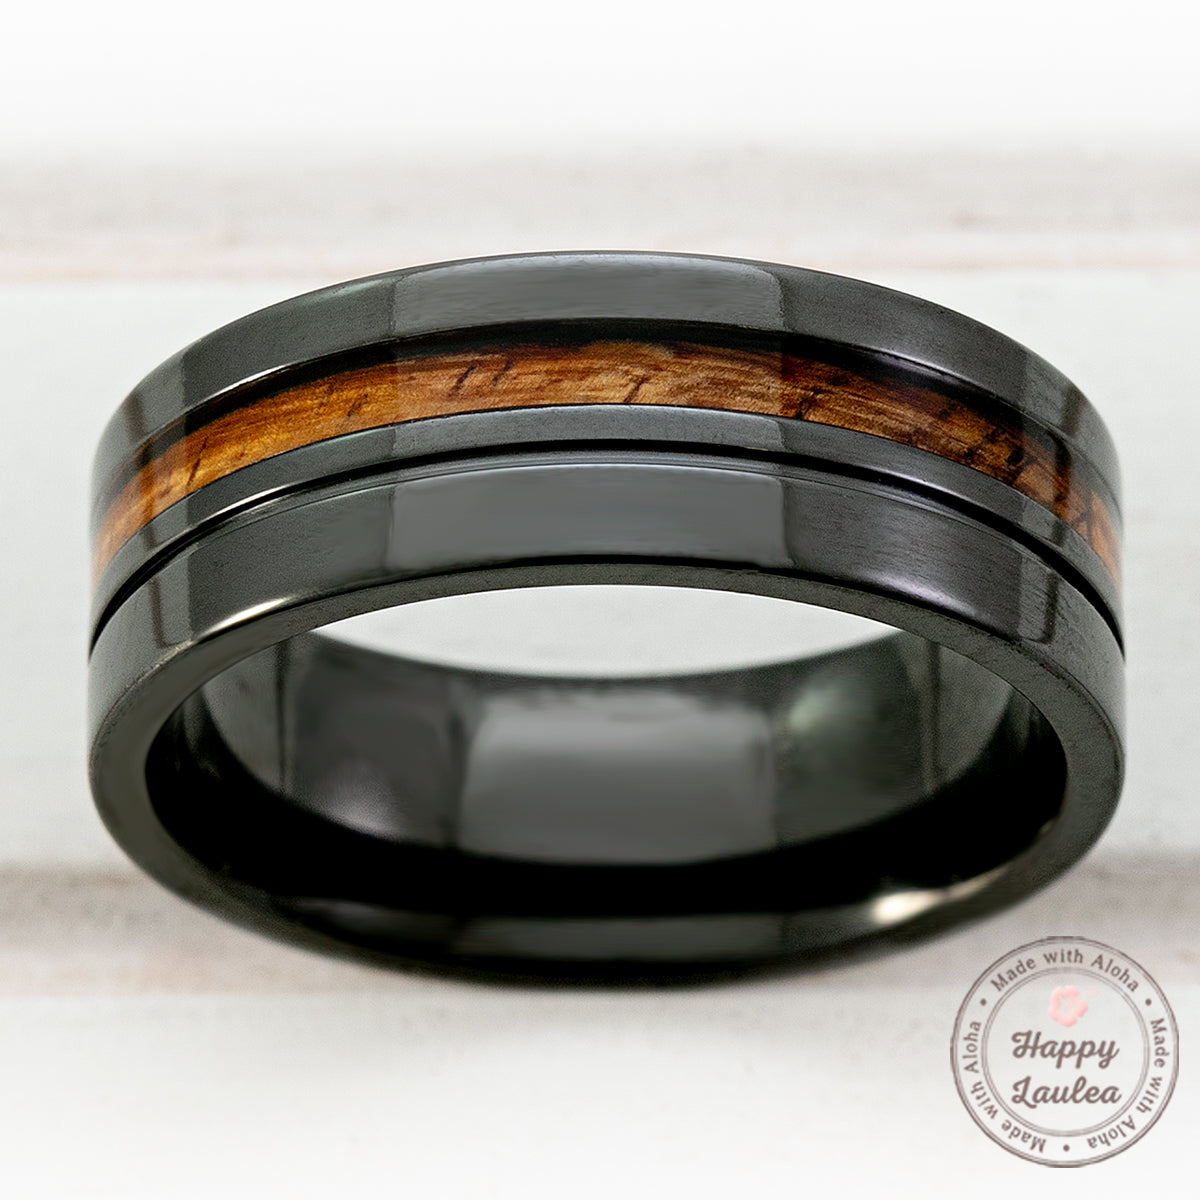 Black Zirconium High Polished Ring with Offset Hawaiian Koa Wood Inlay - 8mm Flat Shape, Comfort Fitment